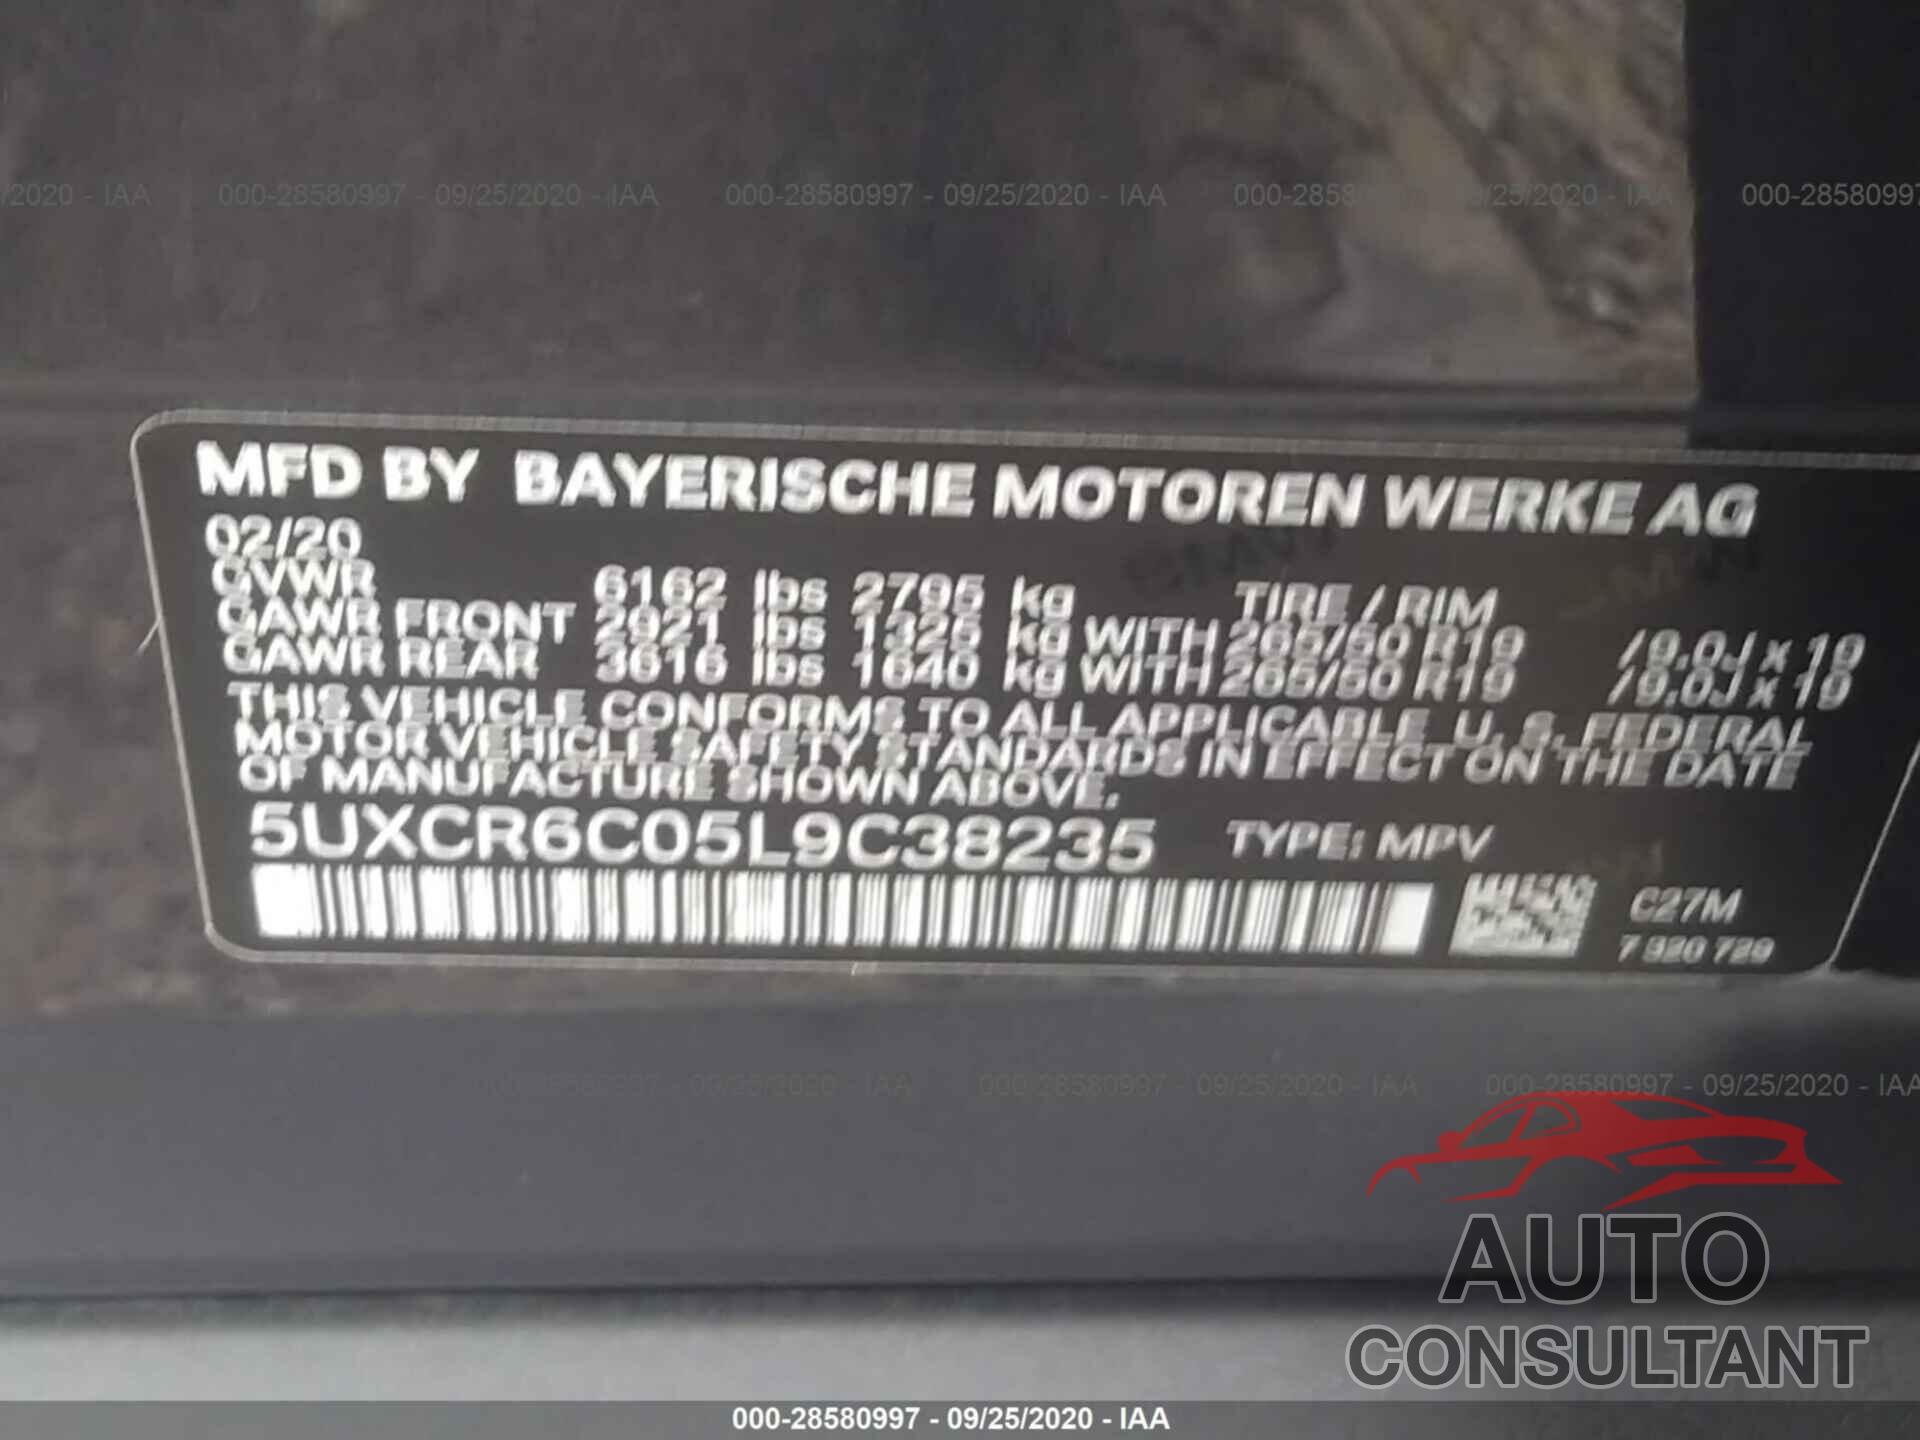 BMW X5 2020 - 5UXCR6C05L9C38235